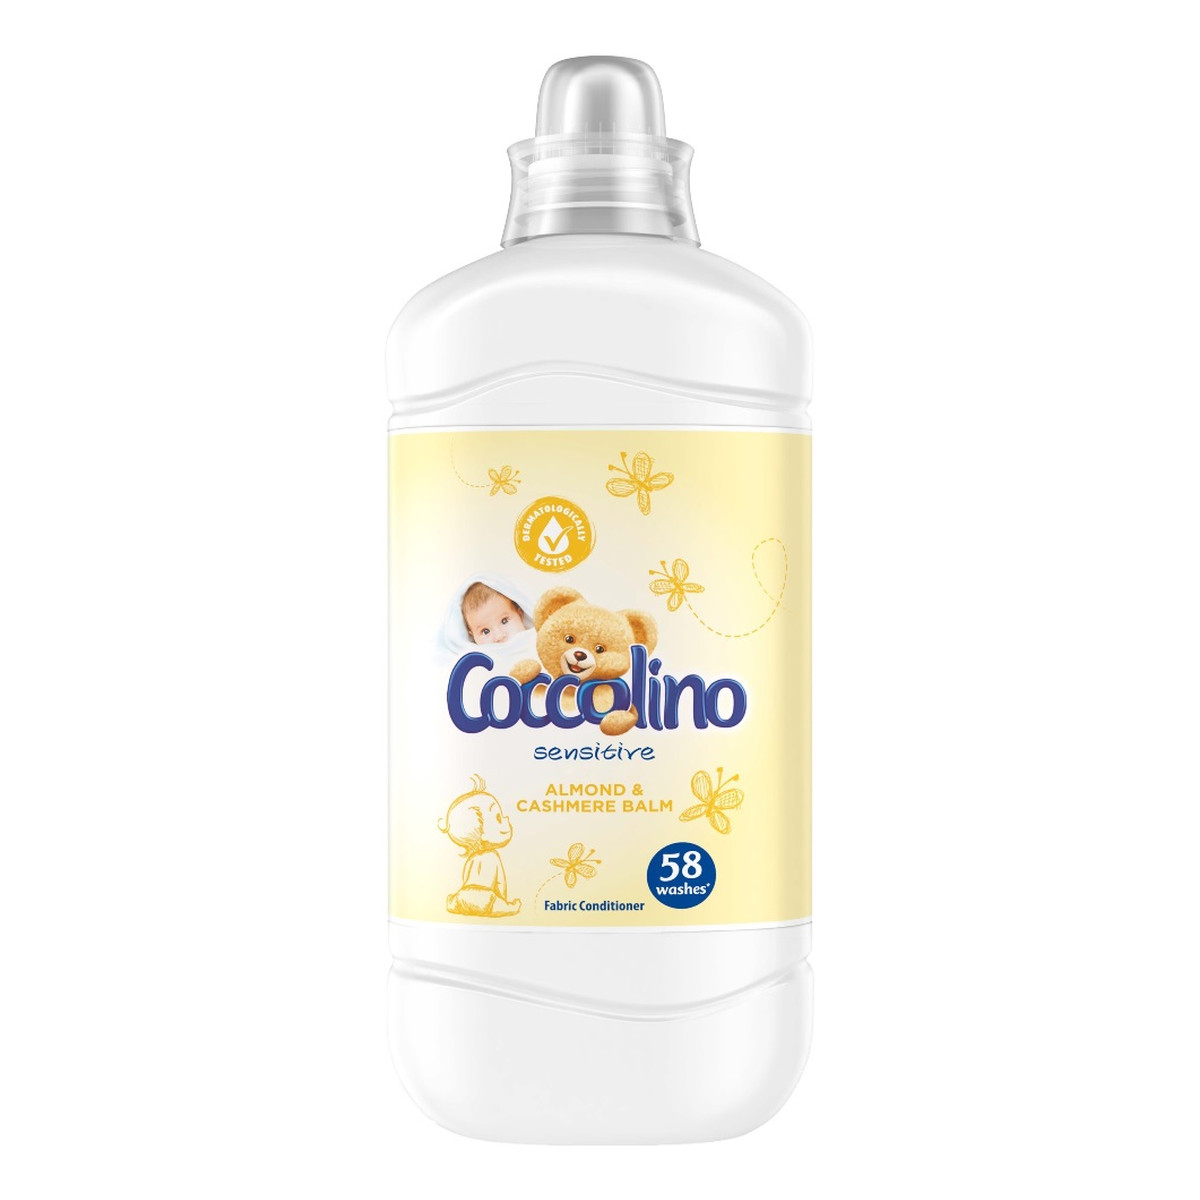 Coccolino Sensitive płyn do płukania tkanin almond & cashmere balm 1.45l 1450ml